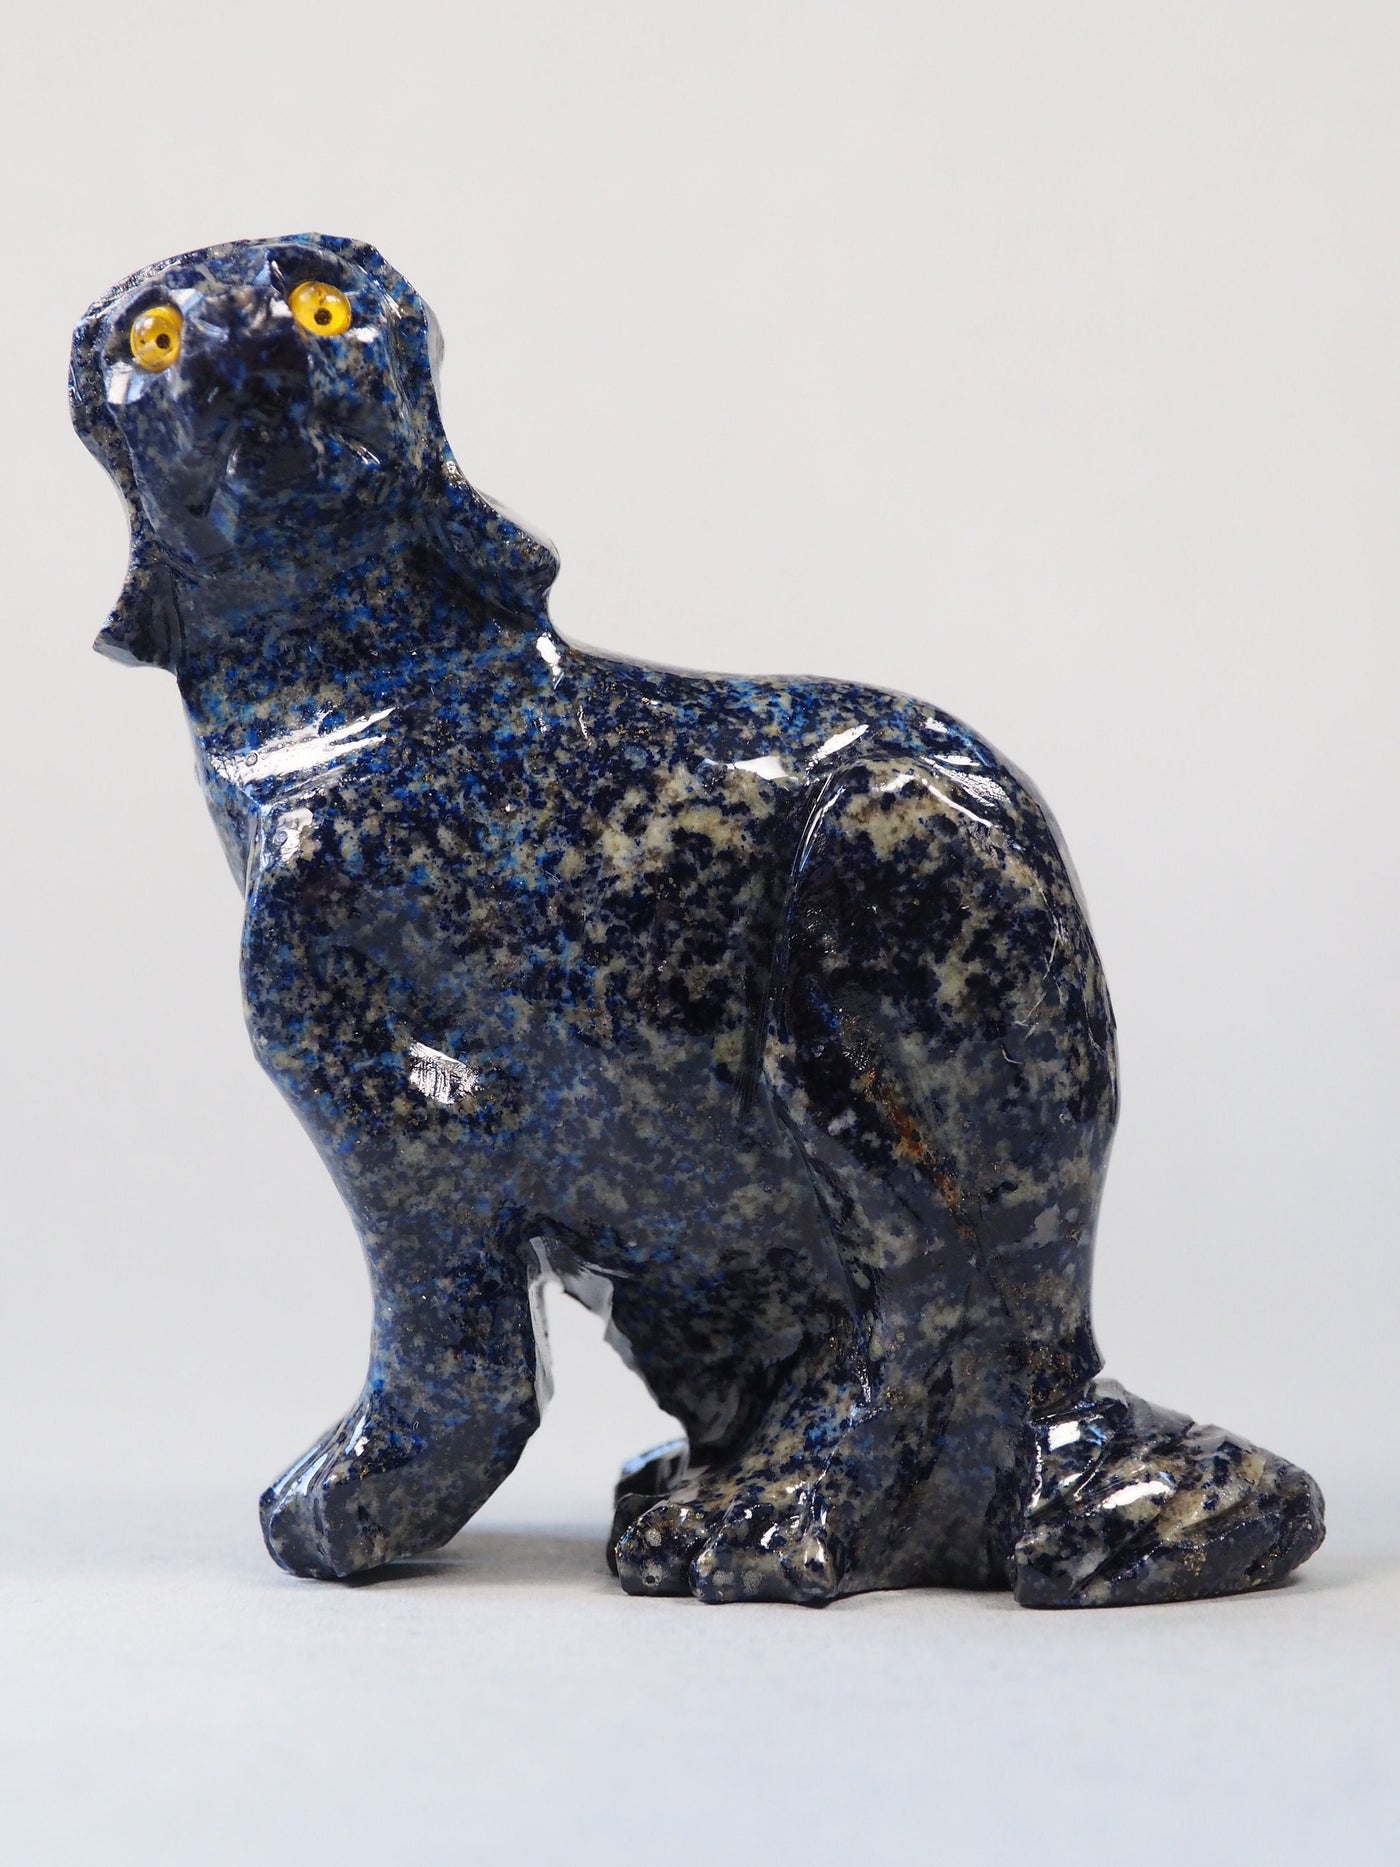 Extravagant Royal blau echt Lapis lazuli dackel Hund Steinfigur Dog dachshund figur Skulptur afghanistan Nr:21/8  Orientsbazar   